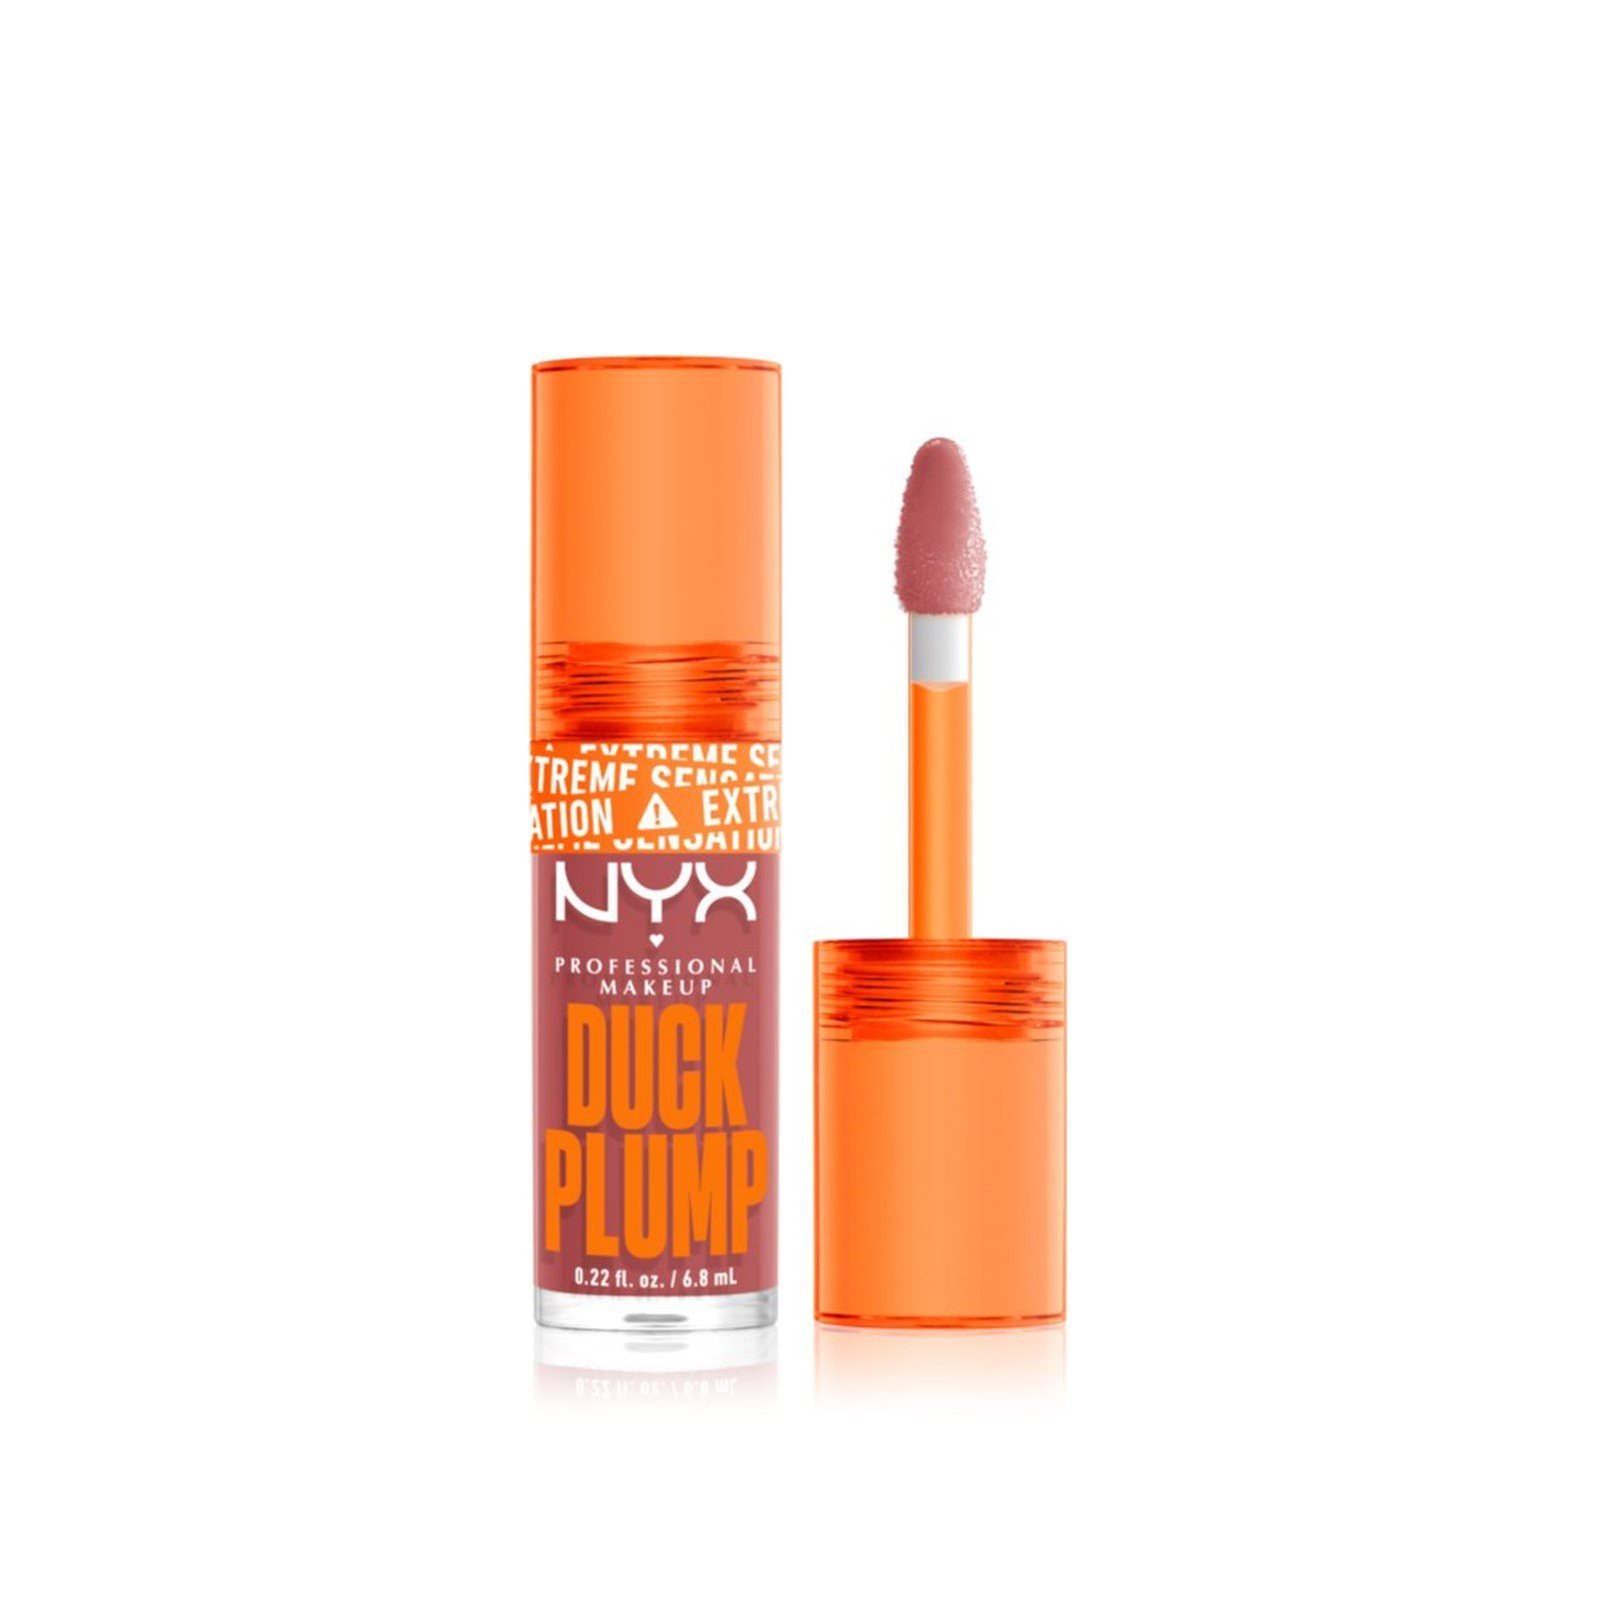 NYX Pro Makeup Duck Plump High Pigment Plumping Lip Gloss